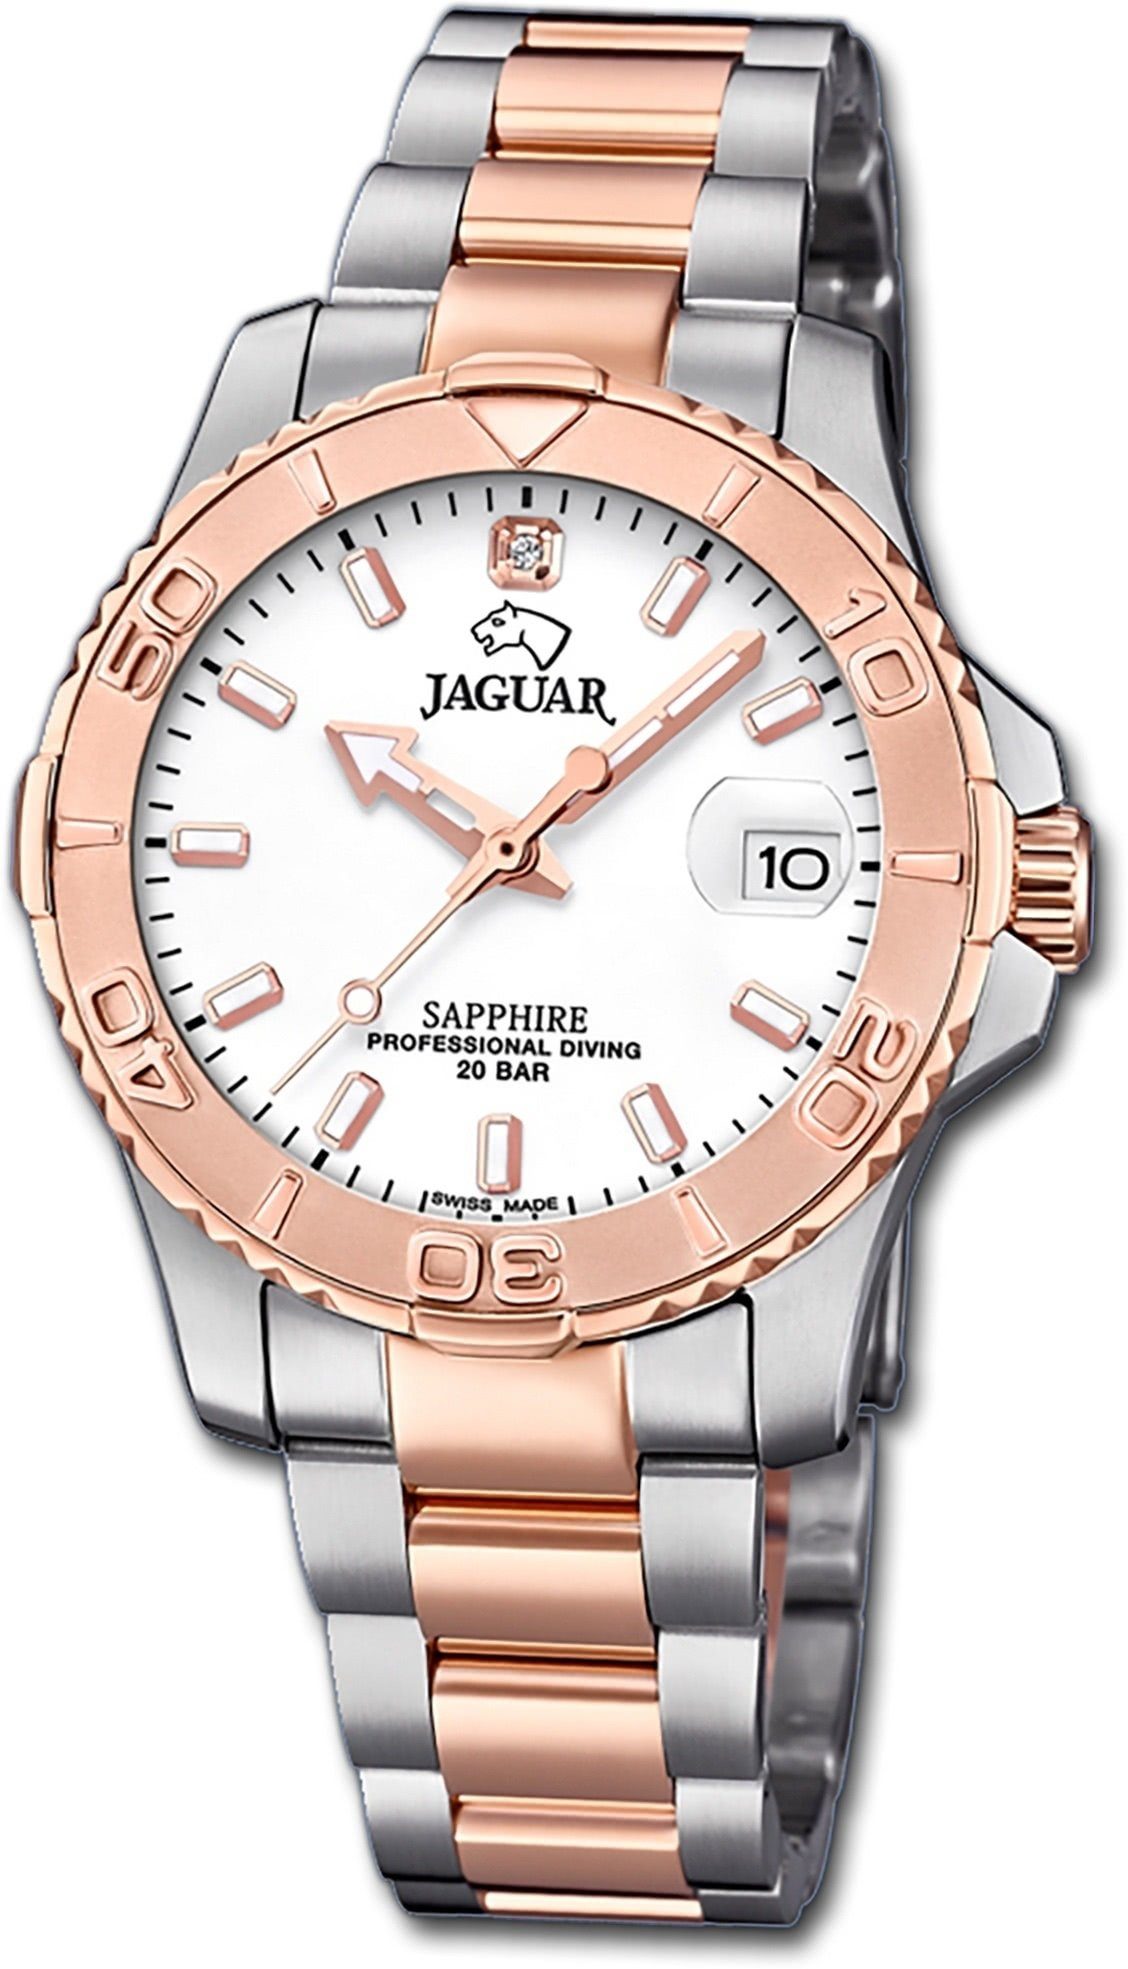 Damen JAGUAR Analog, J871/1 rundes Edelstahlarmband, mittel Gehäuse, 34mm), Uhr Fash mit Edelstahl Damenuhr Jaguar Quarzuhr (ca.